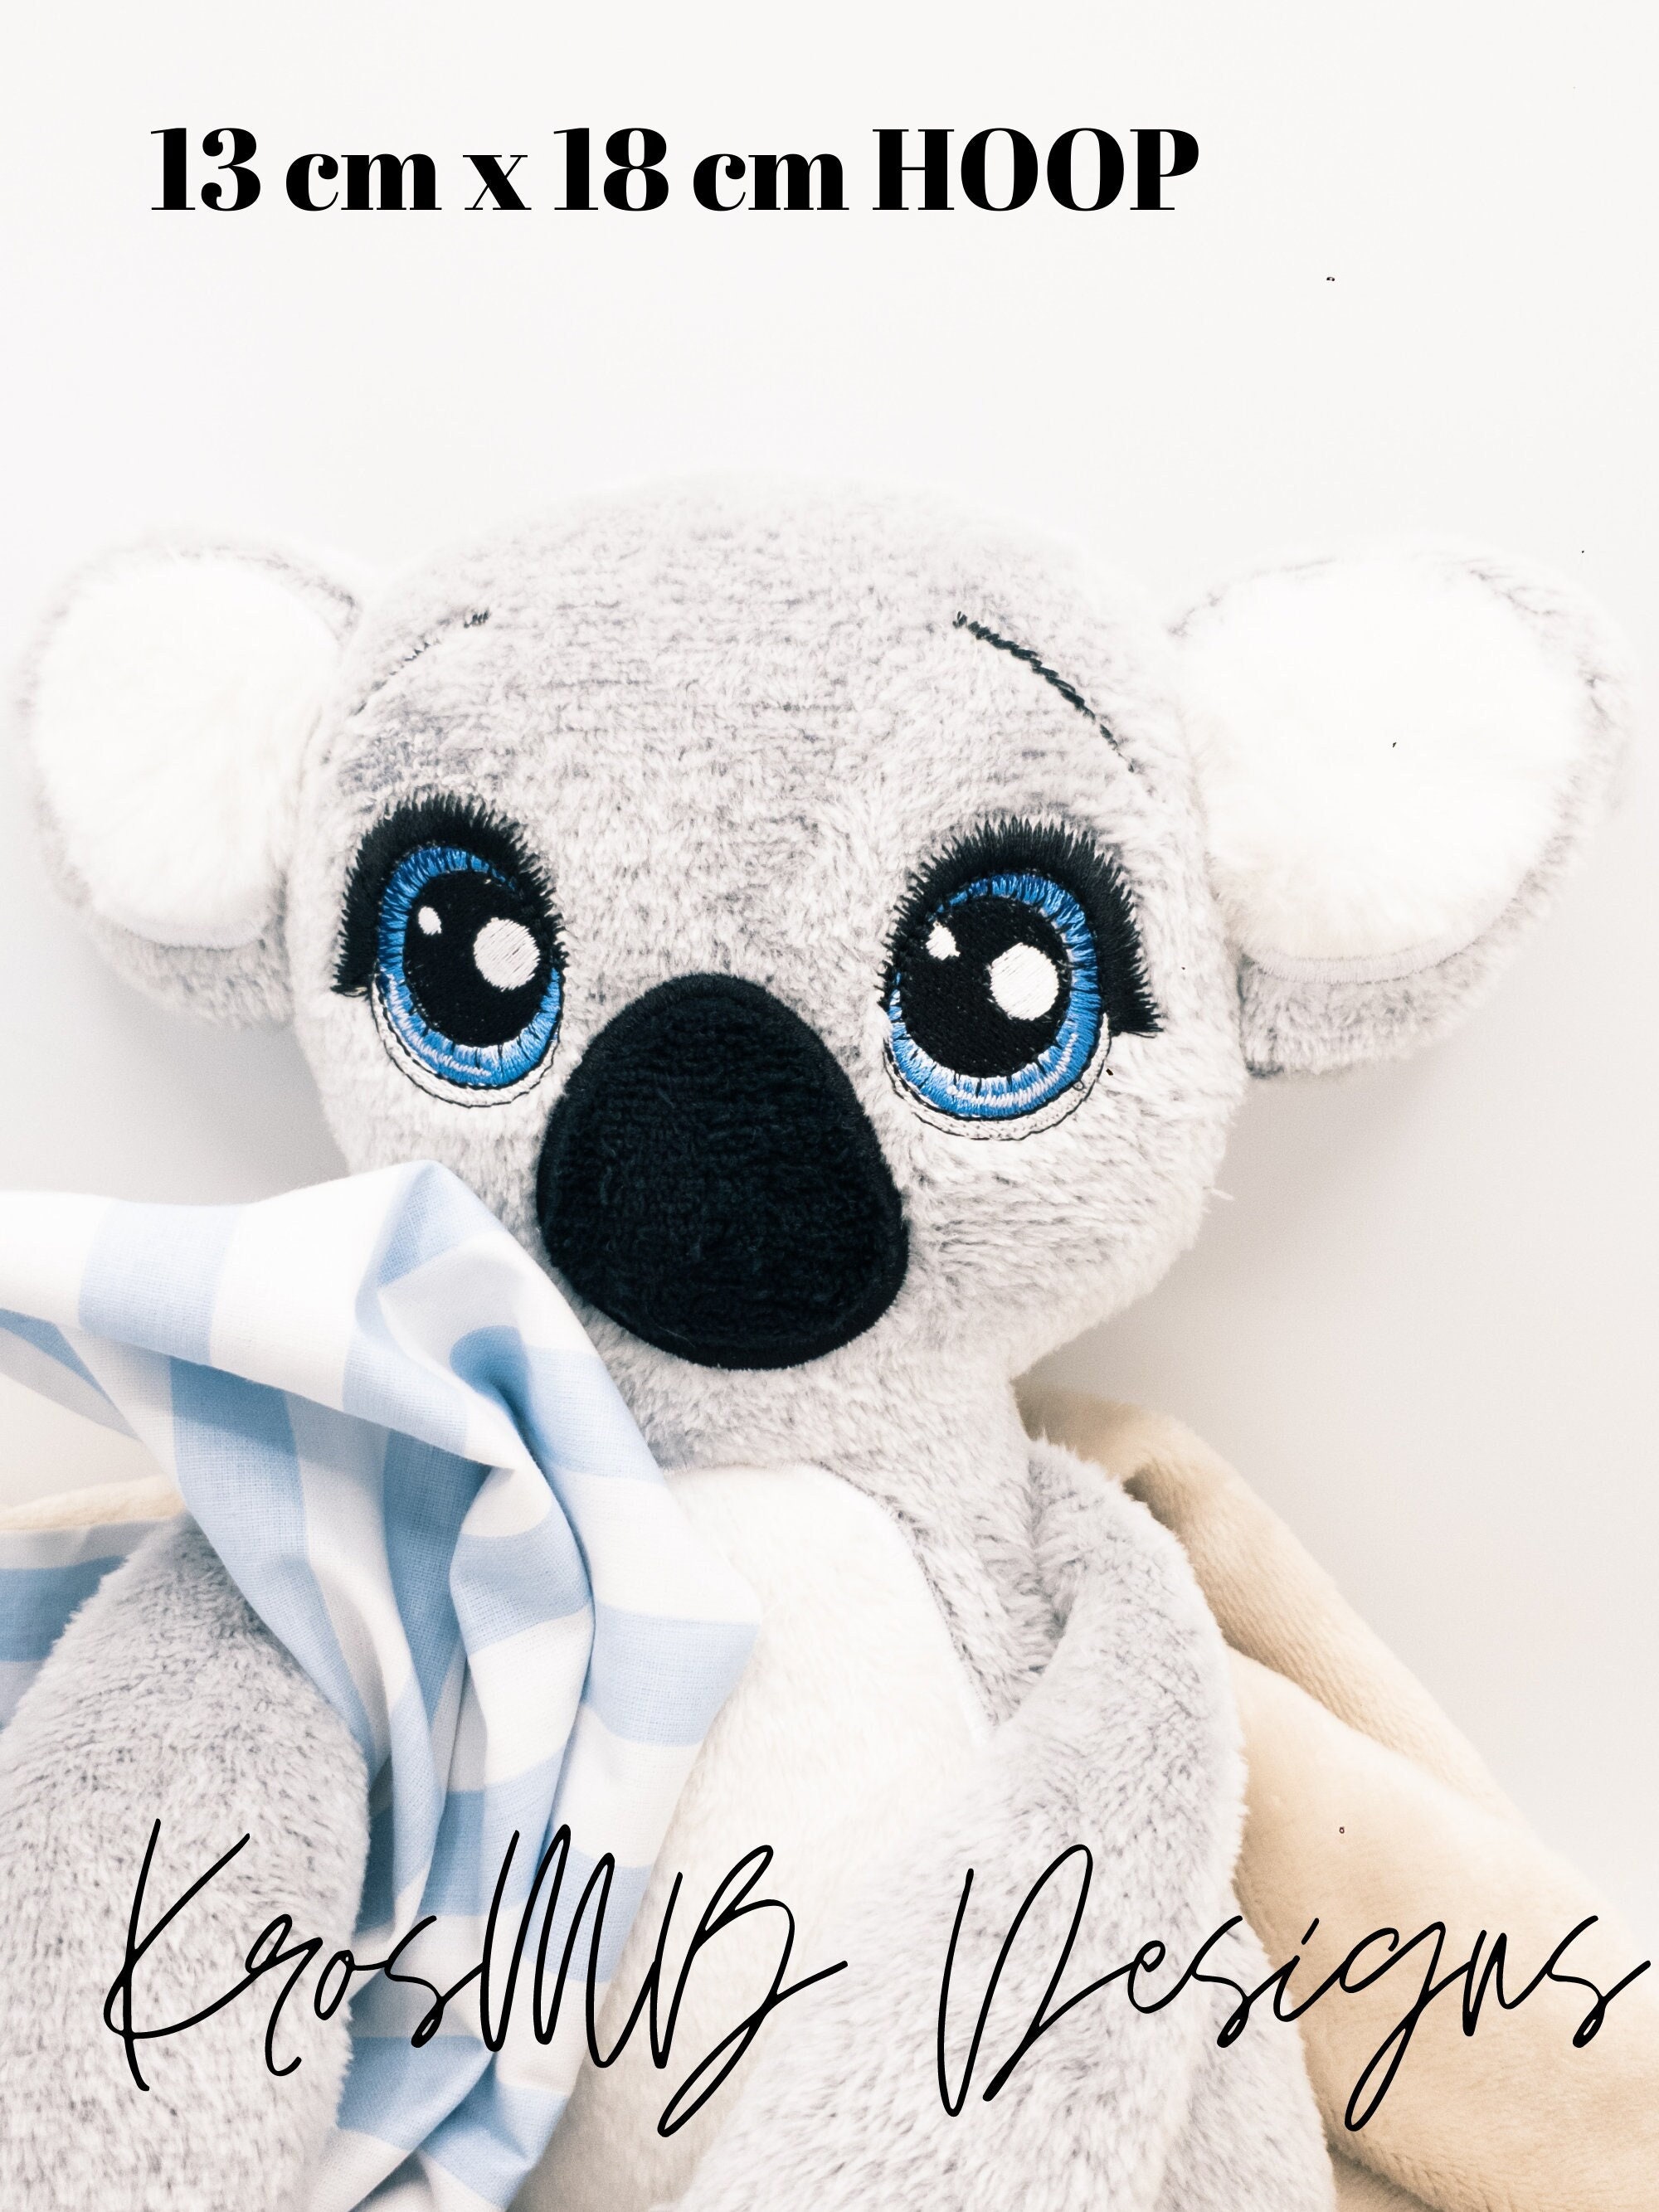 Fluffy Cuddly Giant Huge Plush Koala Bear Stuffed Animals Toys Pillows  Cushion Birthday Gifts For Girls Boys Kids Girlfriend 70 90 120cm From  Smilesky1, $37.63